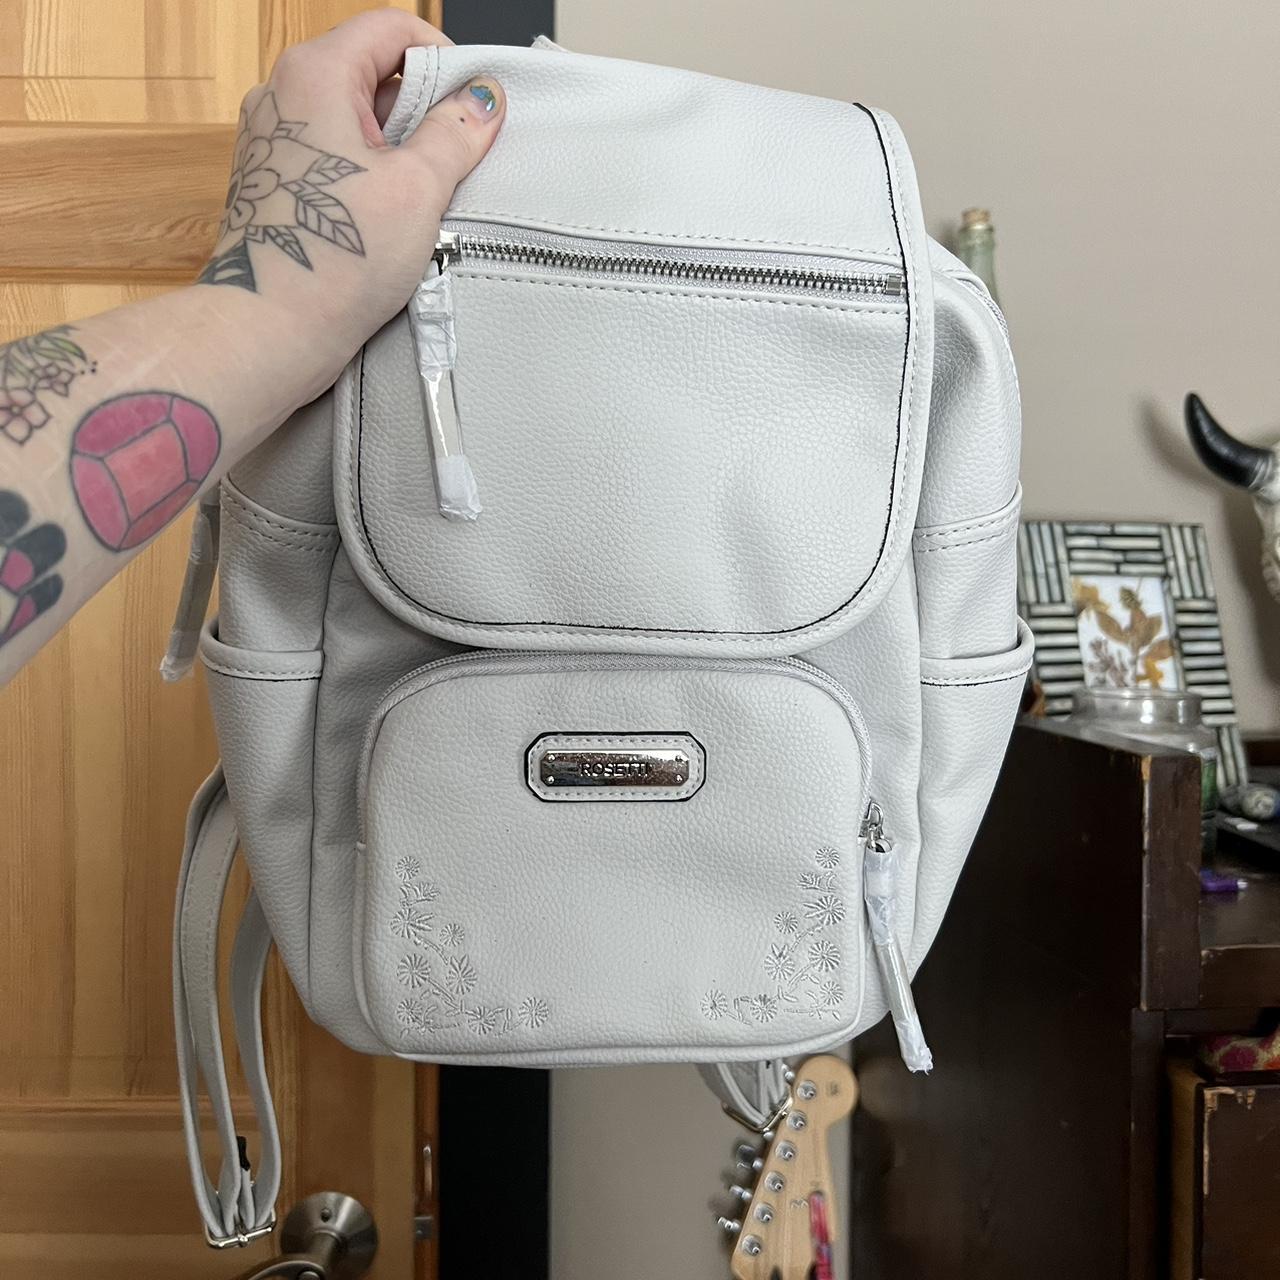 Rosetti Tinley Backpack